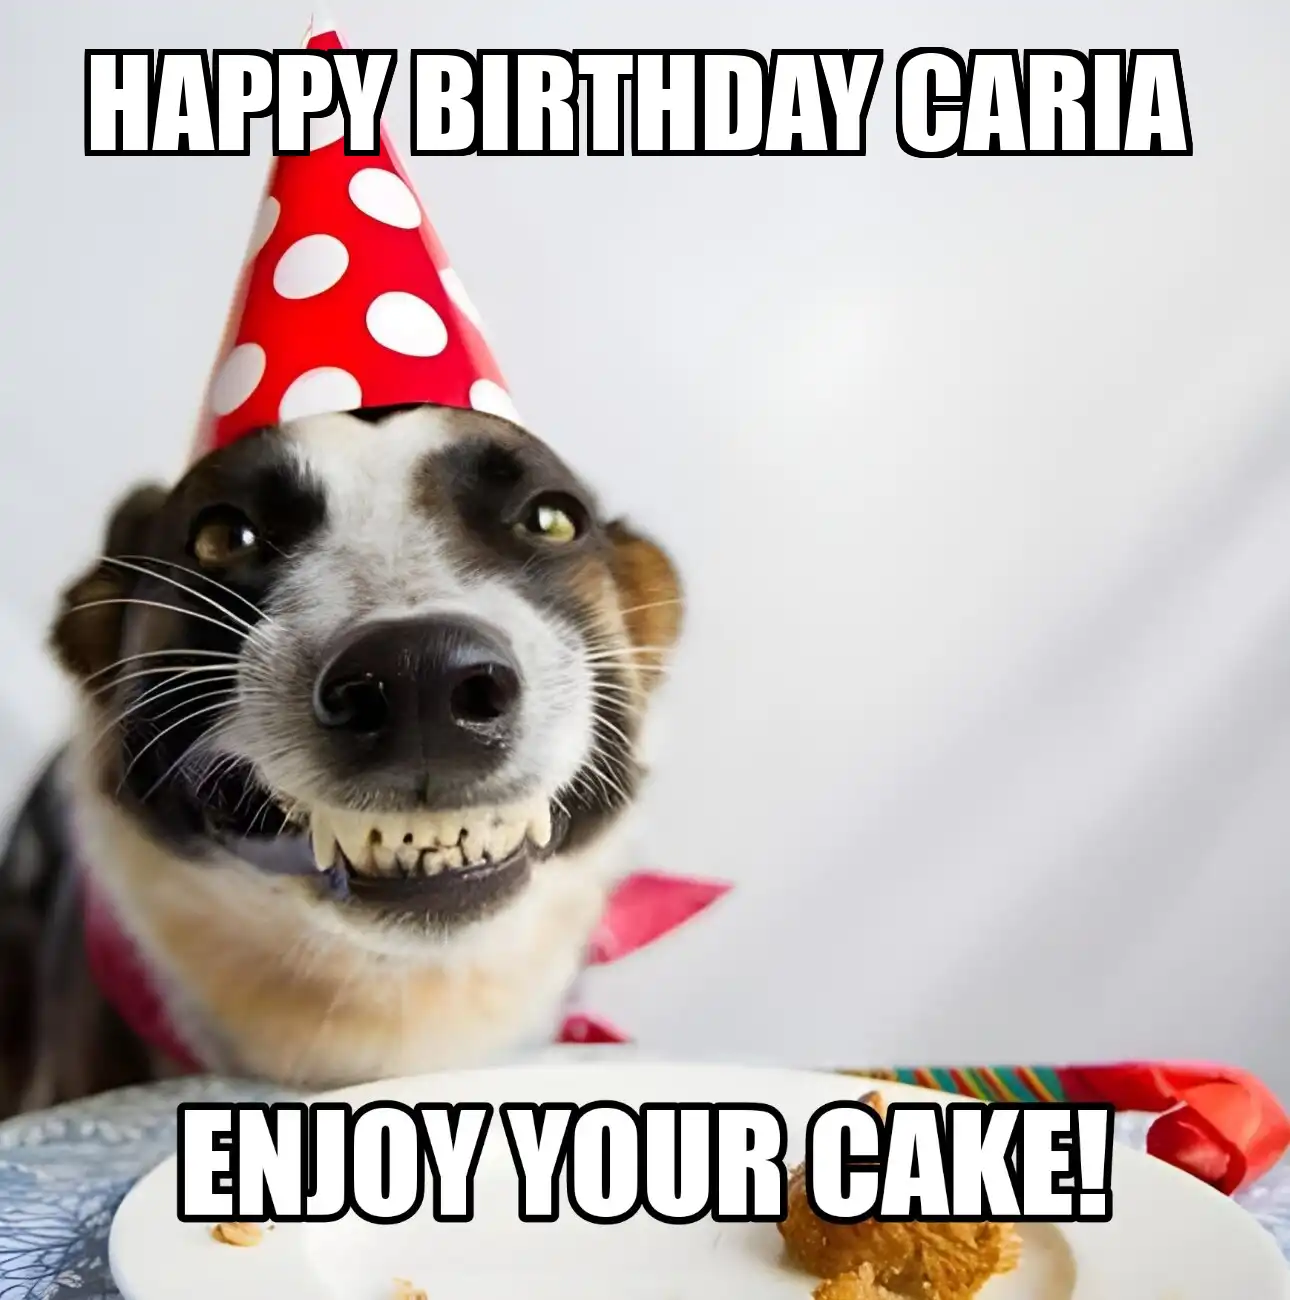 Happy Birthday Caria Enjoy Your Cake Dog Meme